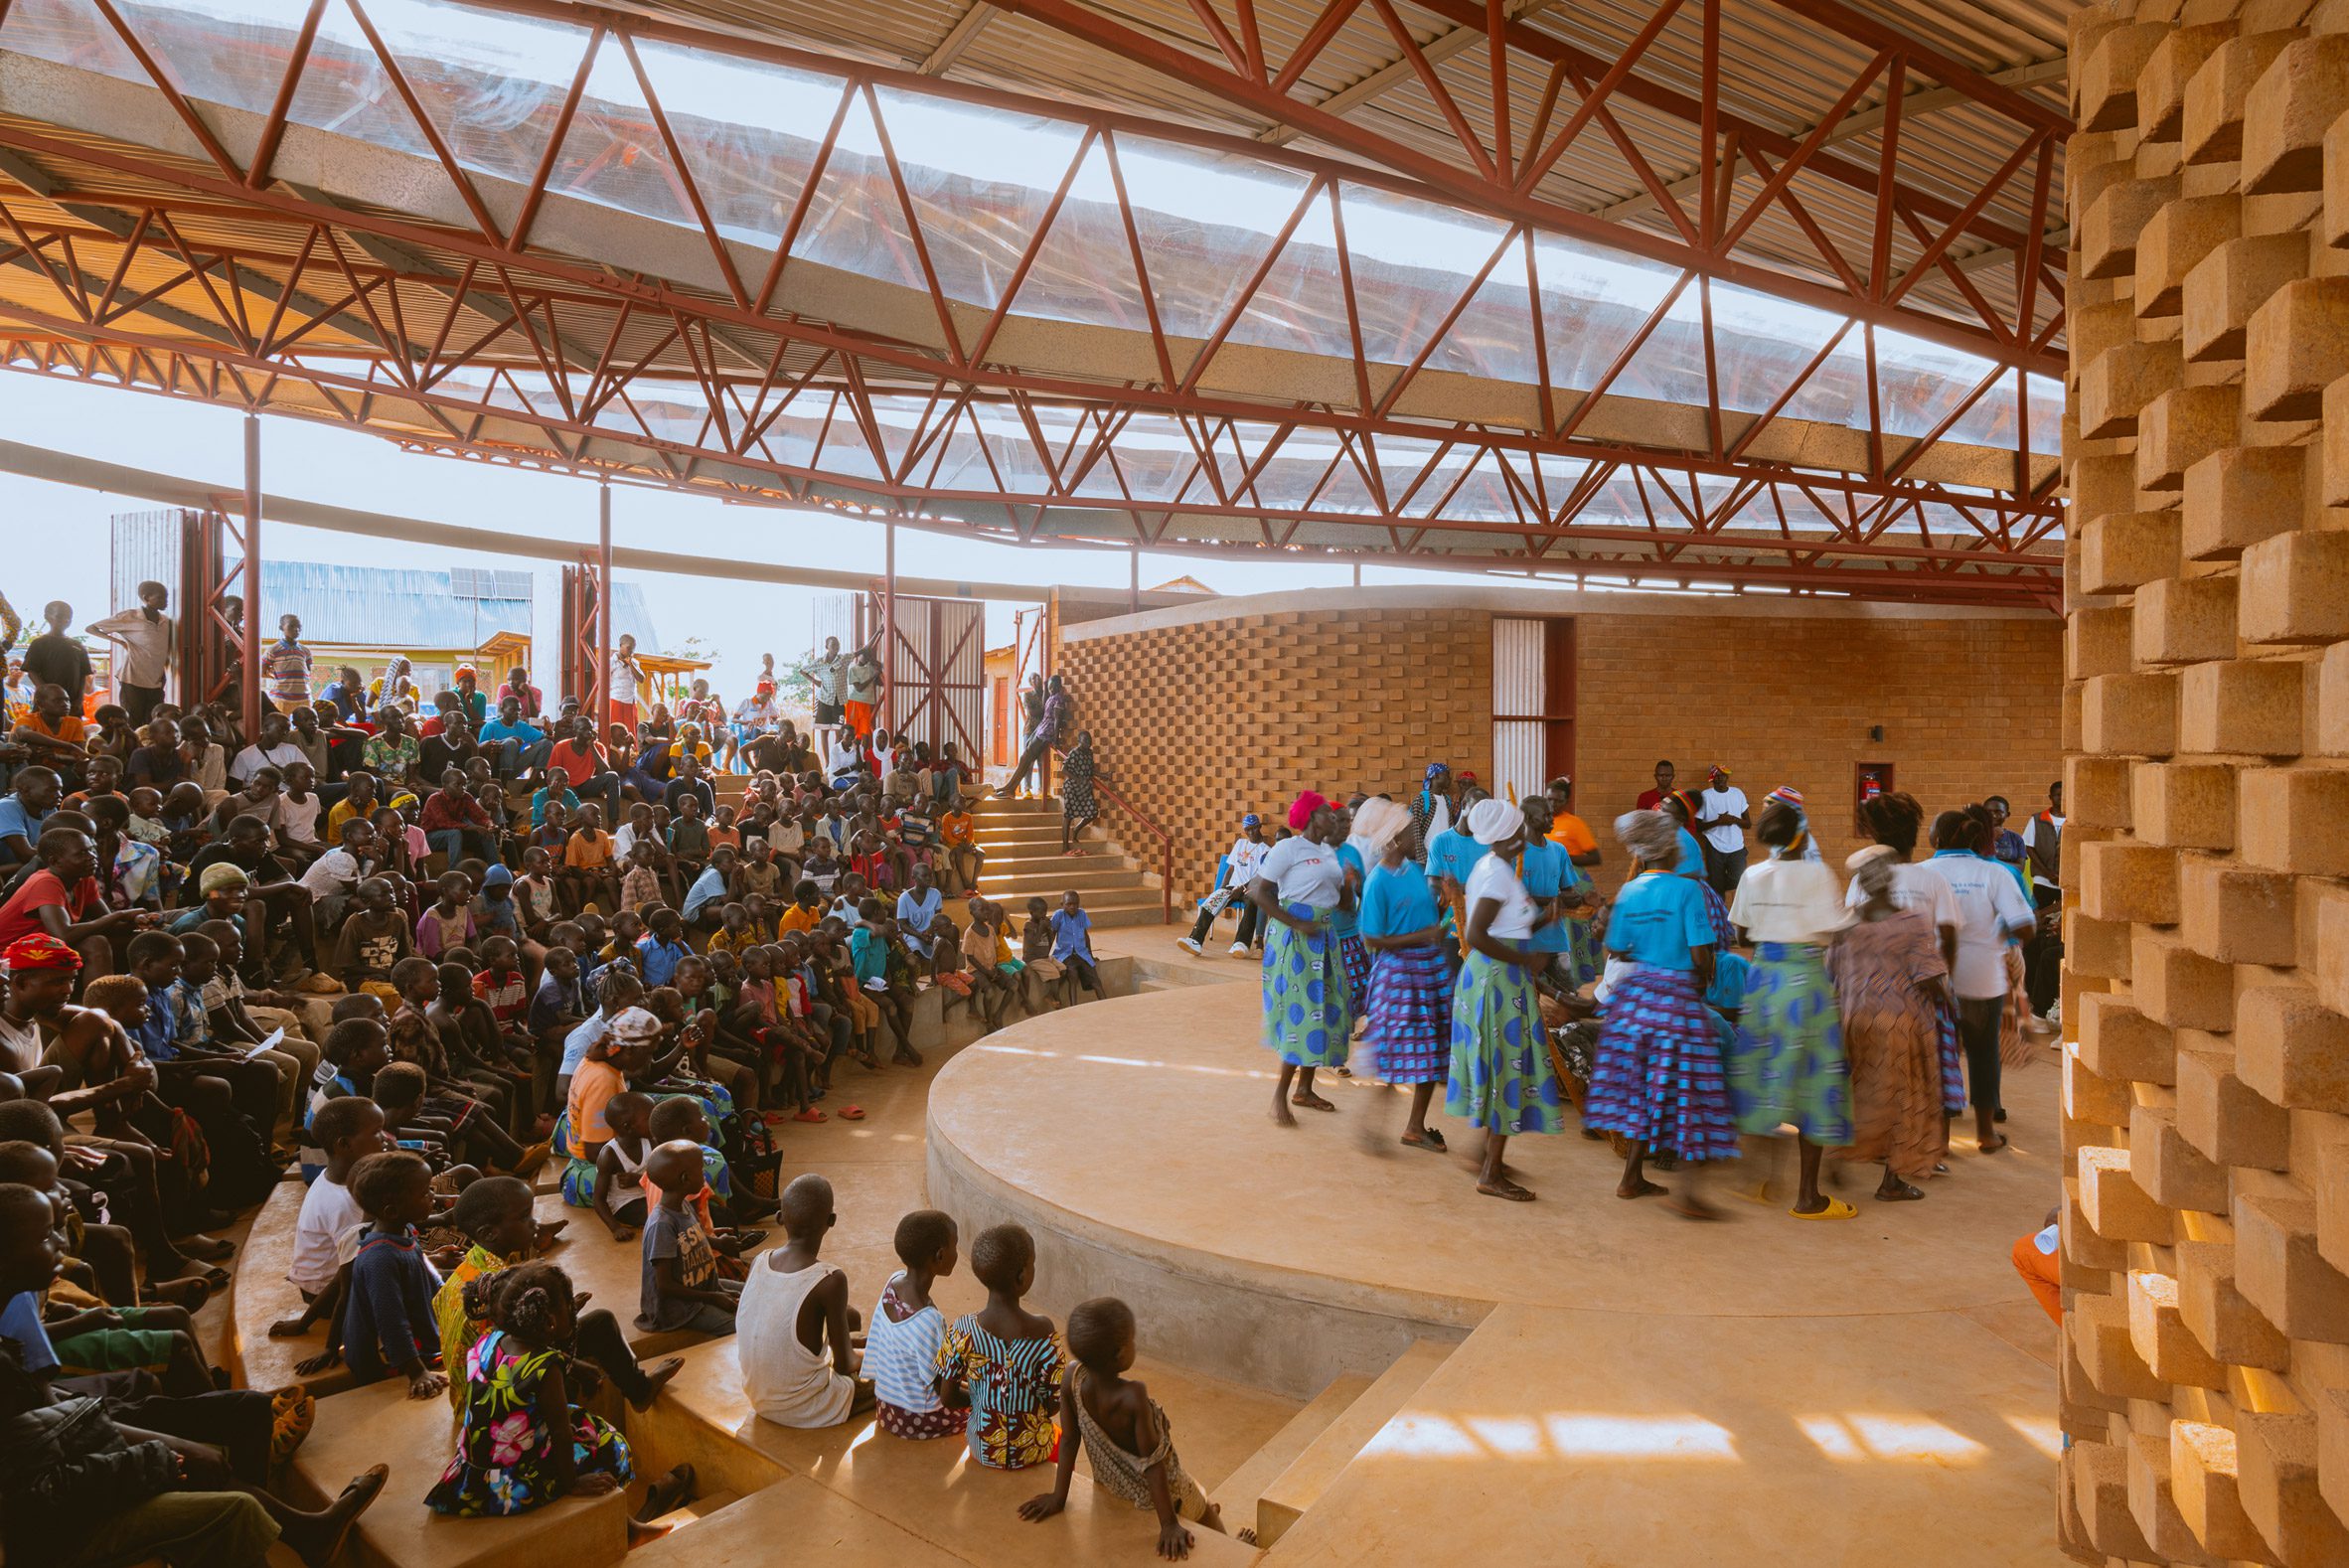 Stage in Ugandan community space